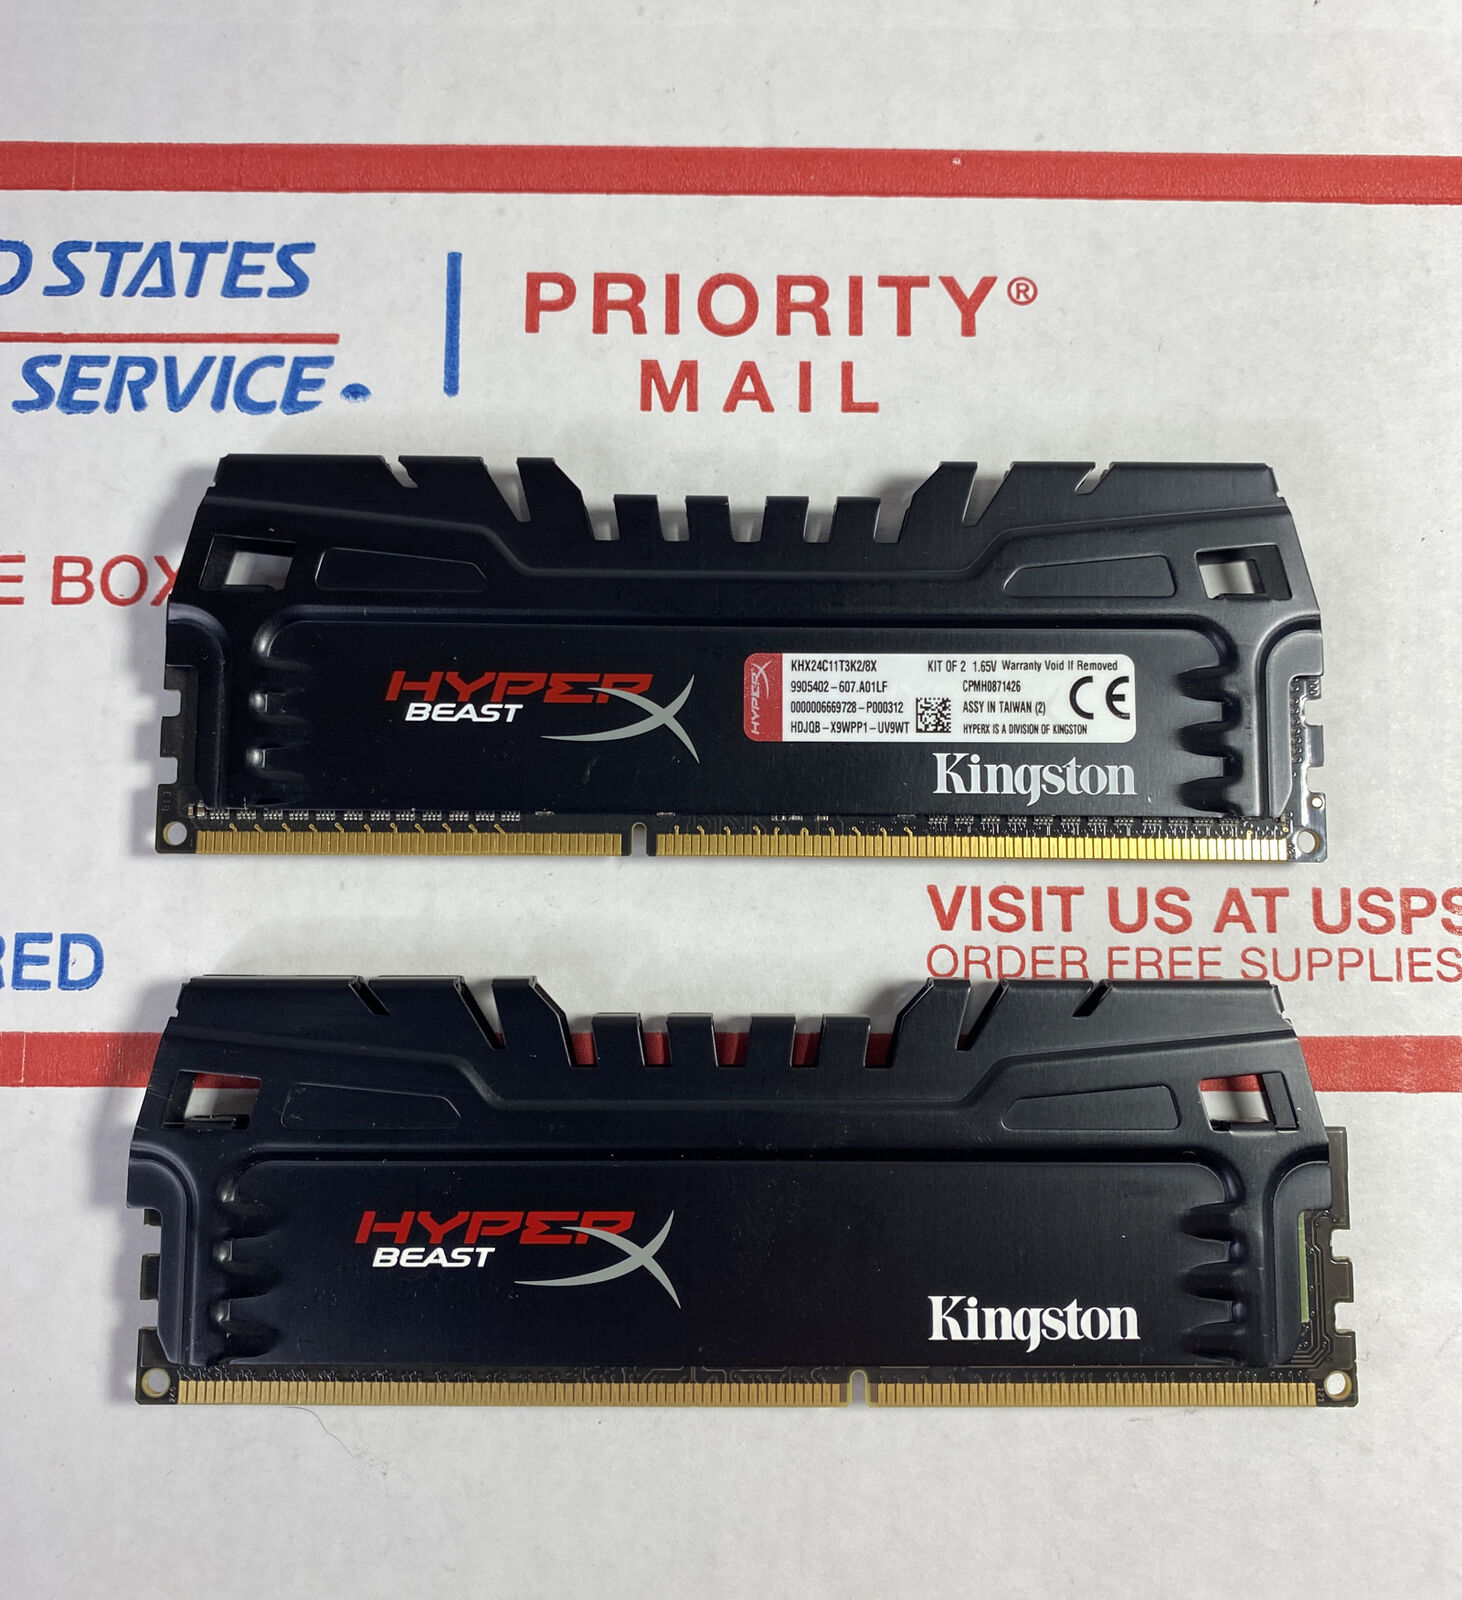 KINGSTON HYPER BEAST (2X4GB) DDR3 RAM - NEXT DAY SHIP - WARRANTY